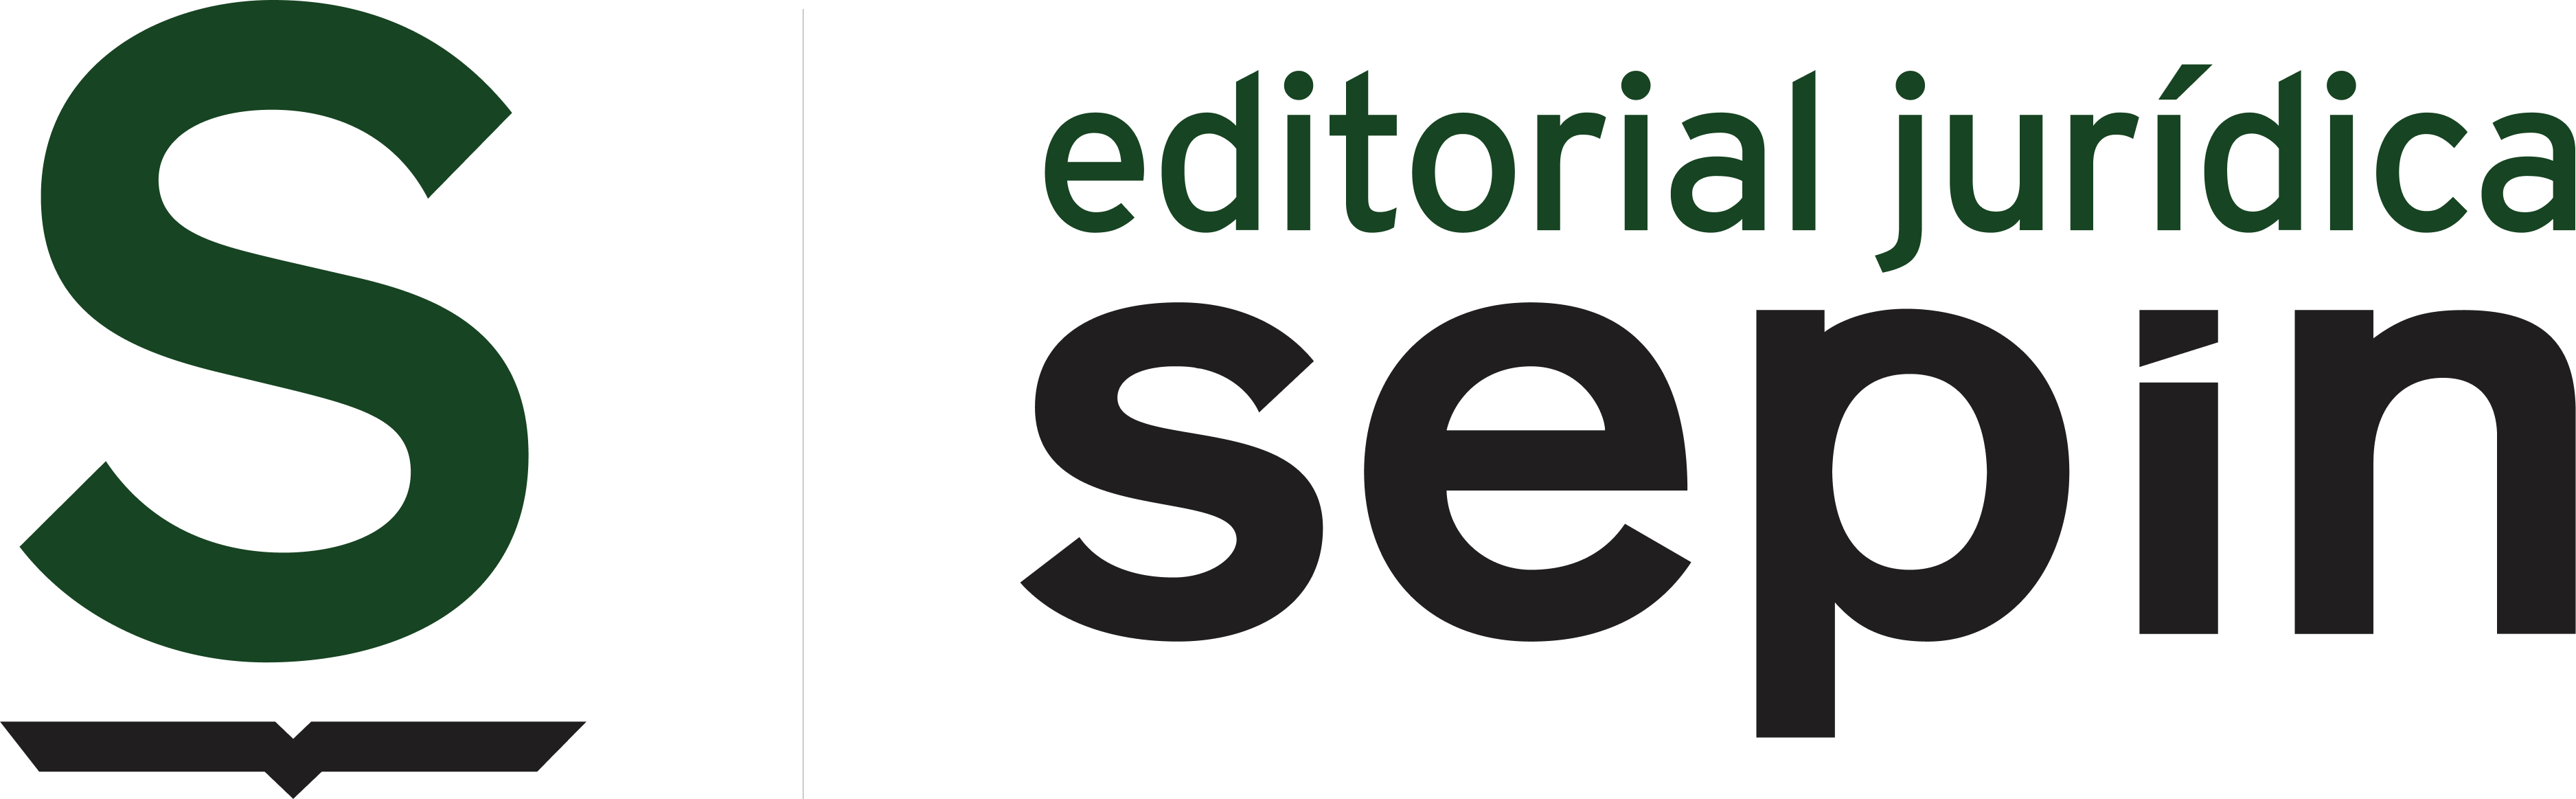 Editorial Sepín